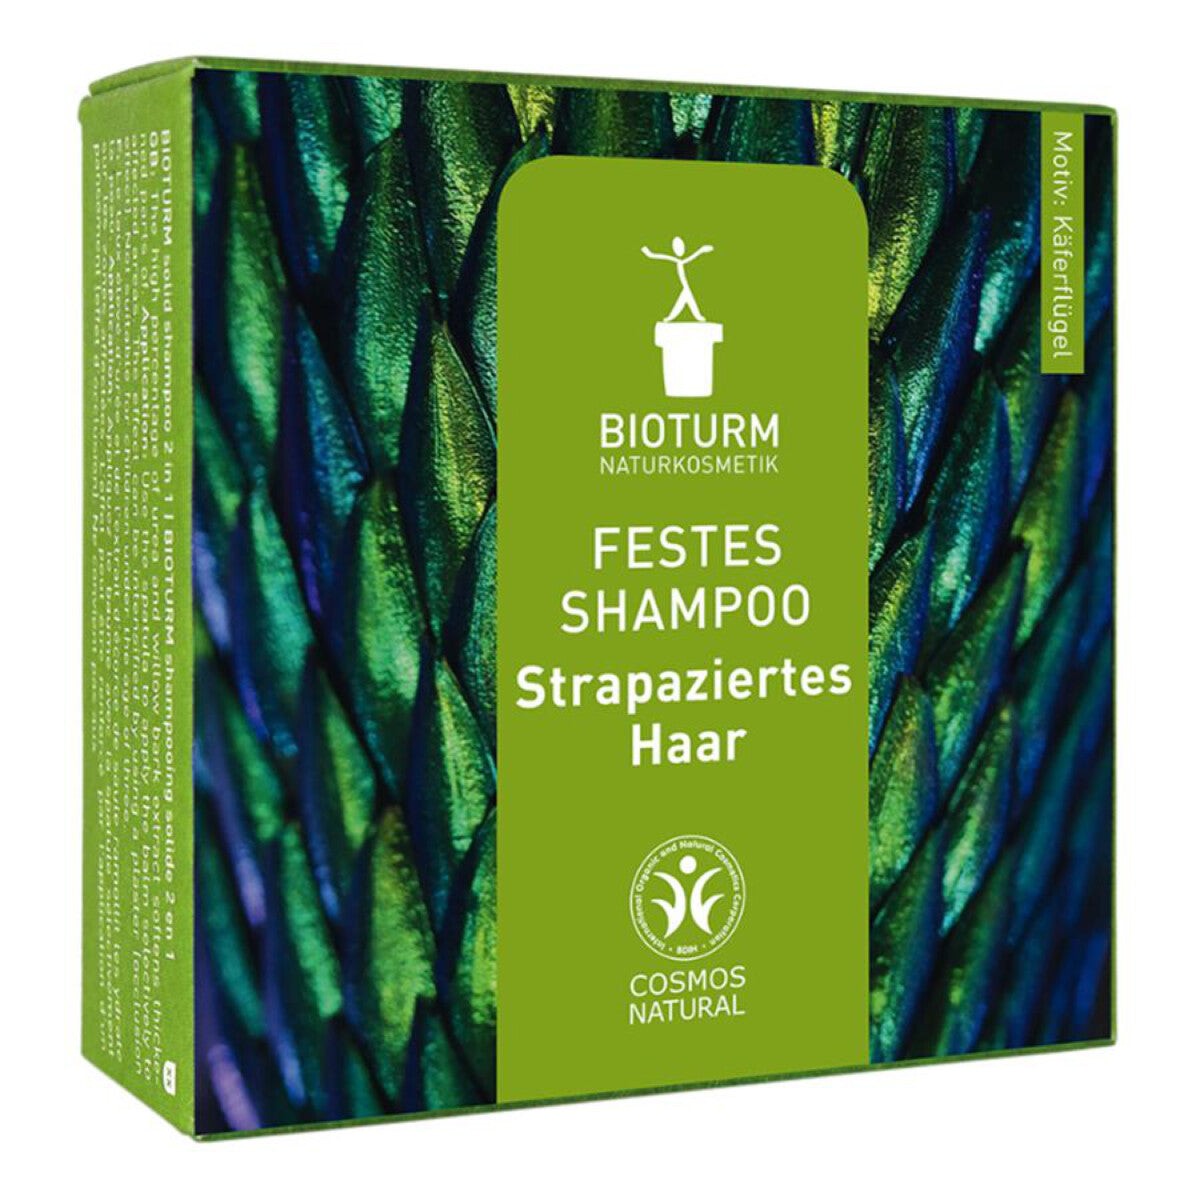 BIOTURM Festes Shampoo, strapaziertes Haar - 100 g